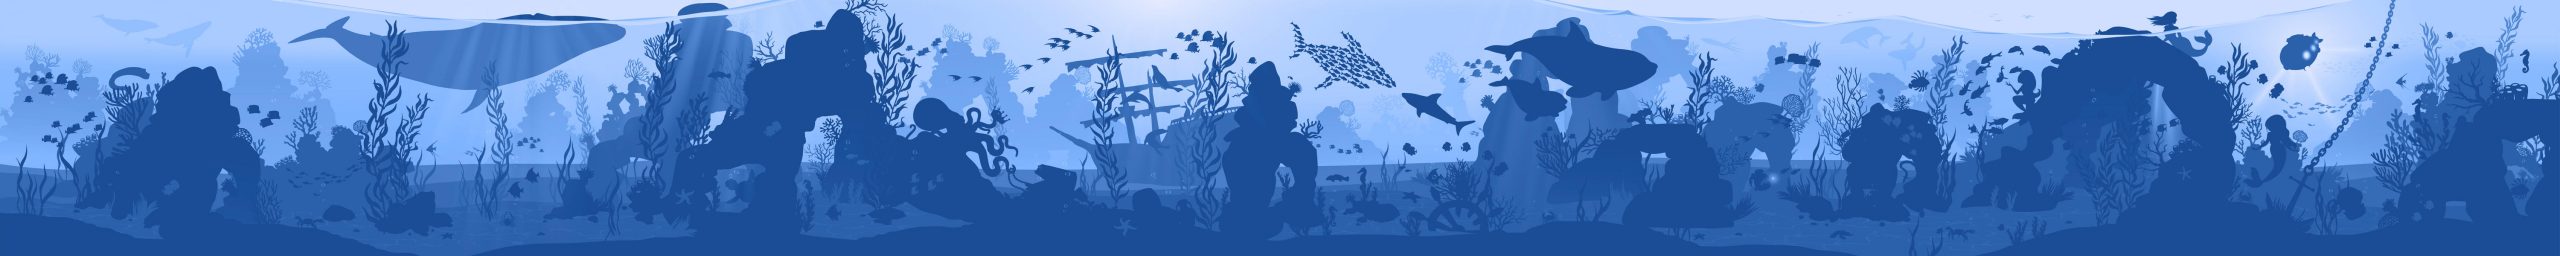 SilhouetteMural-Underwater2